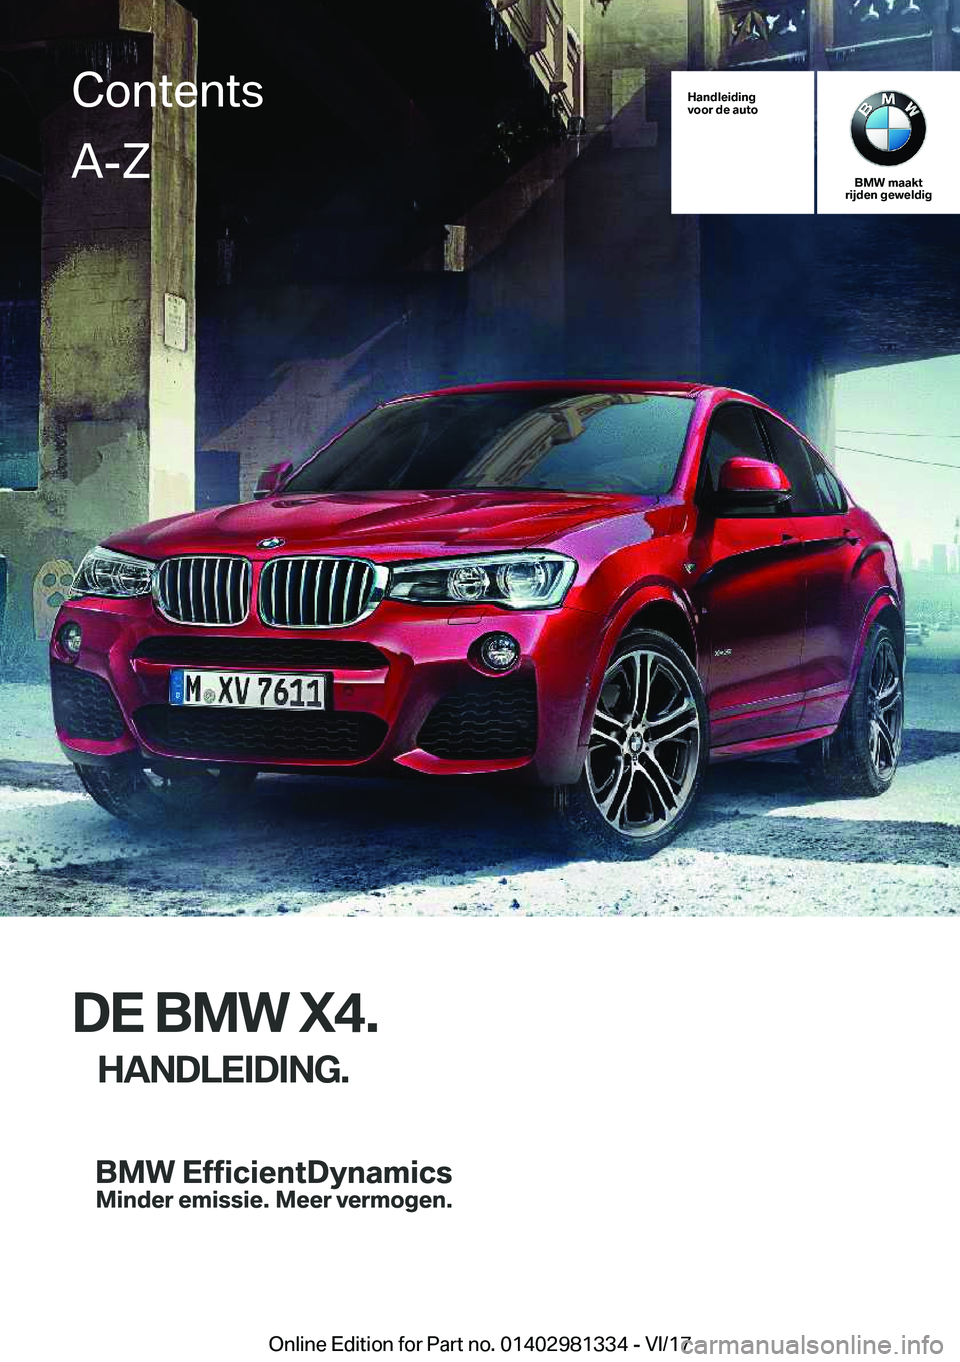 BMW X4 2018  Instructieboekjes (in Dutch) �H�a�n�d�l�e�i�d�i�n�g
�v�o�o�r��d�e��a�u�t�o
�B�M�W��m�a�a�k�t
�r�i�j�d�e�n��g�e�w�e�l�d�i�g
�D�E��B�M�W��X�4�.
�H�A�N�D�L�E�I�D�I�N�G�.
�C�o�n�t�e�n�t�s�A�-�Z
�O�n�l�i�n�e� �E�d�i�t�i�o�n� �f�